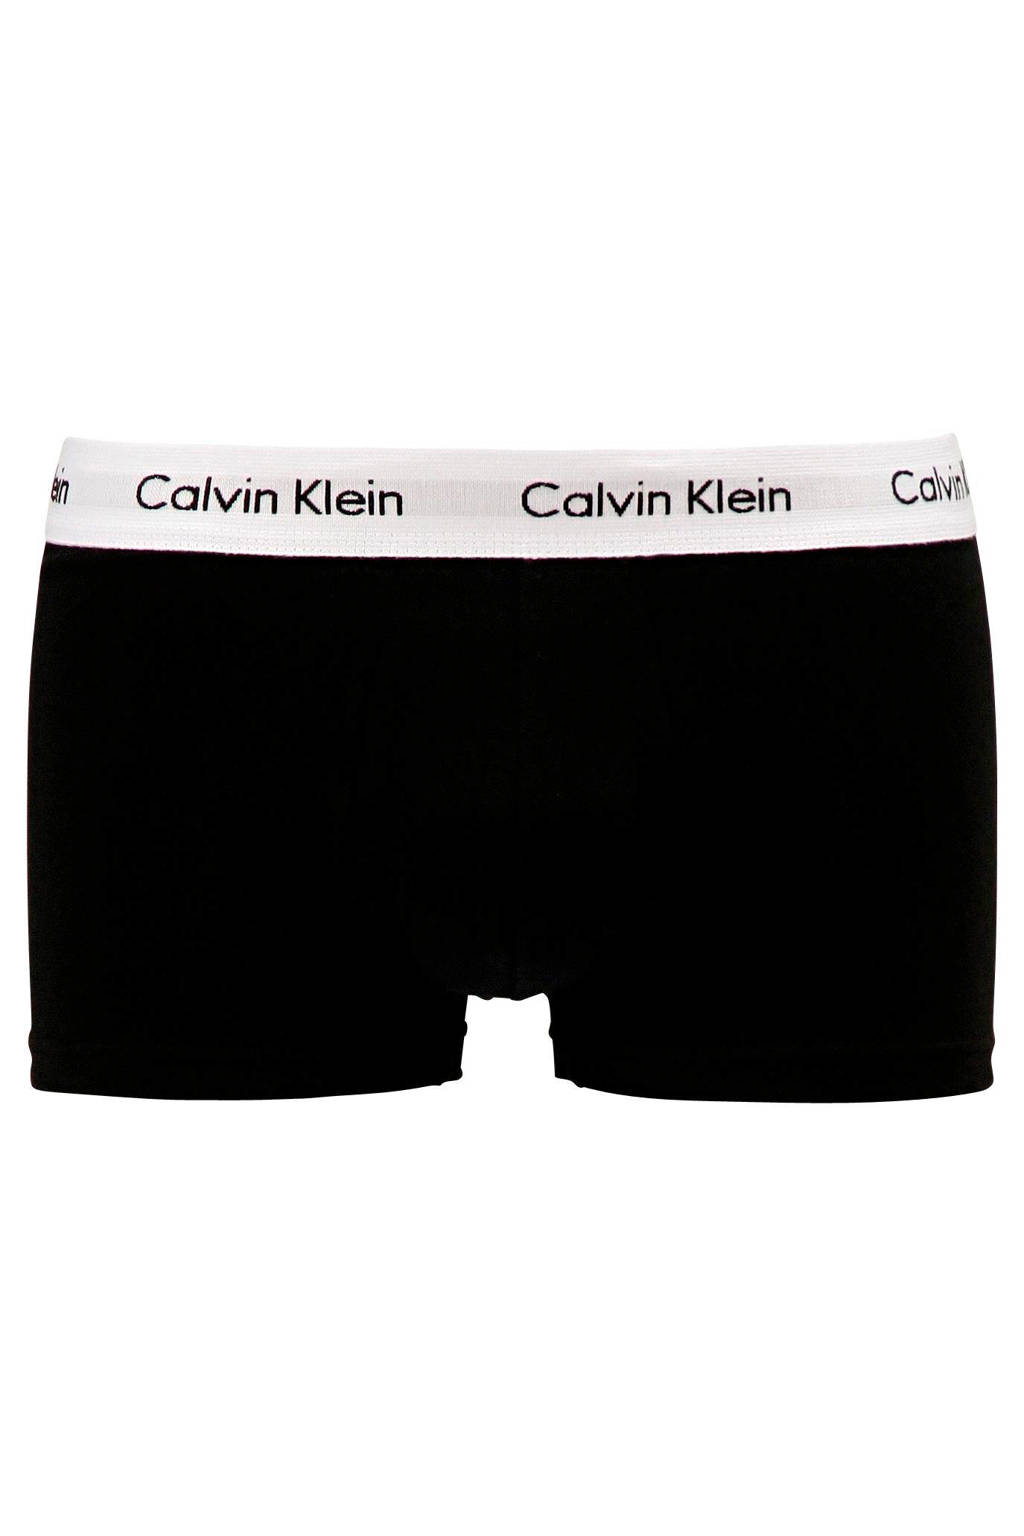 Calvin klein boxershort dames